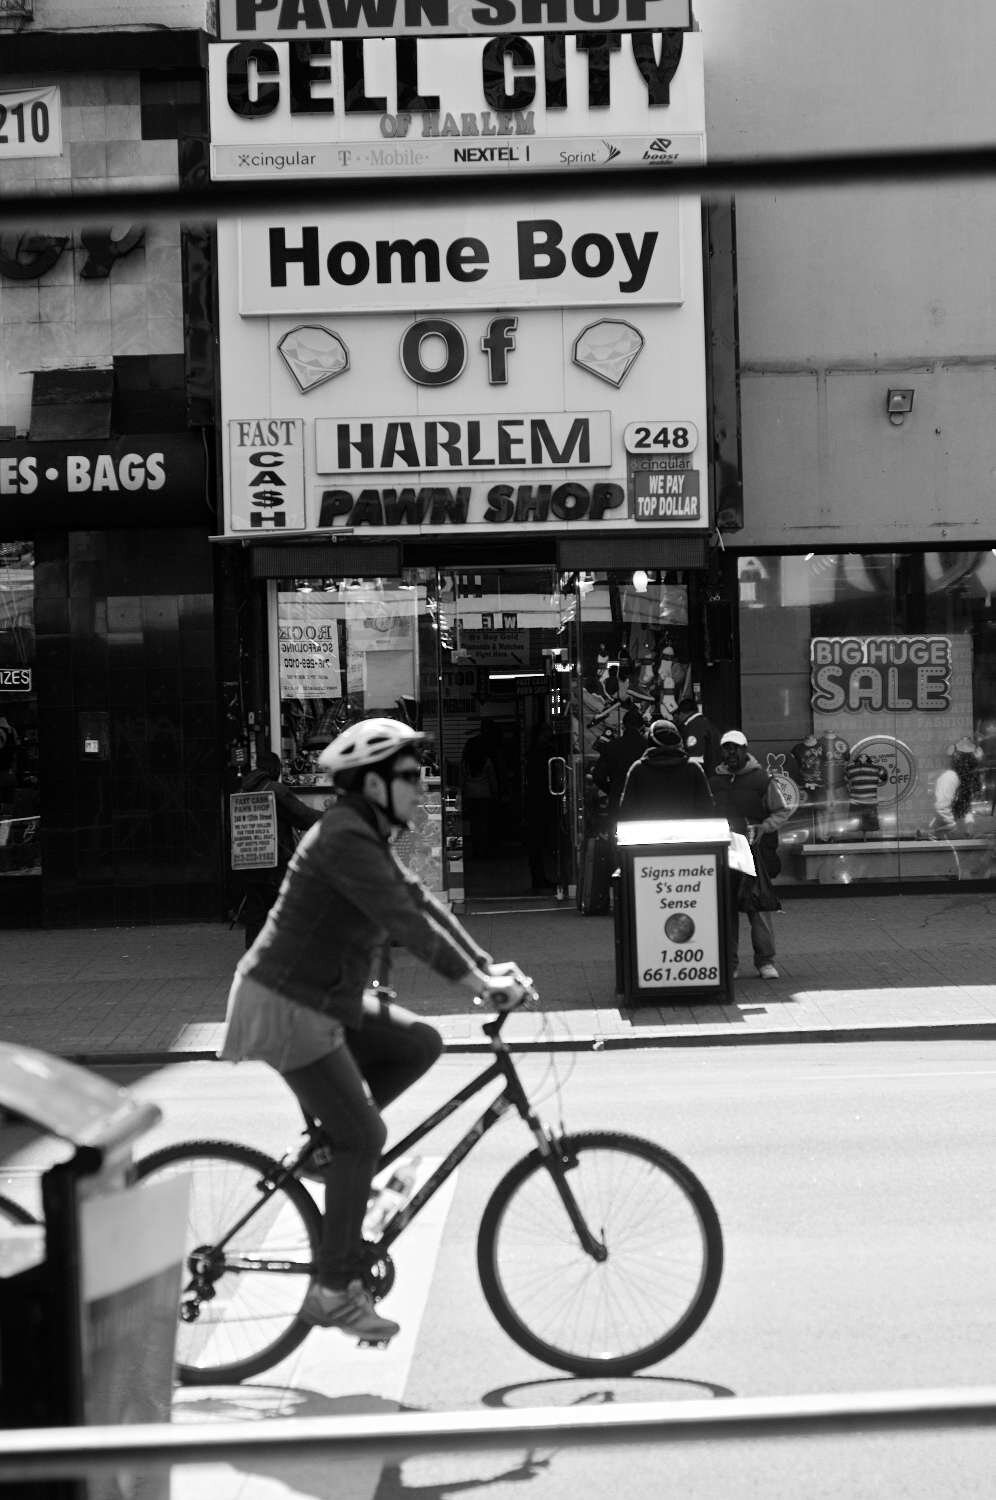 Home Boy of Harlem